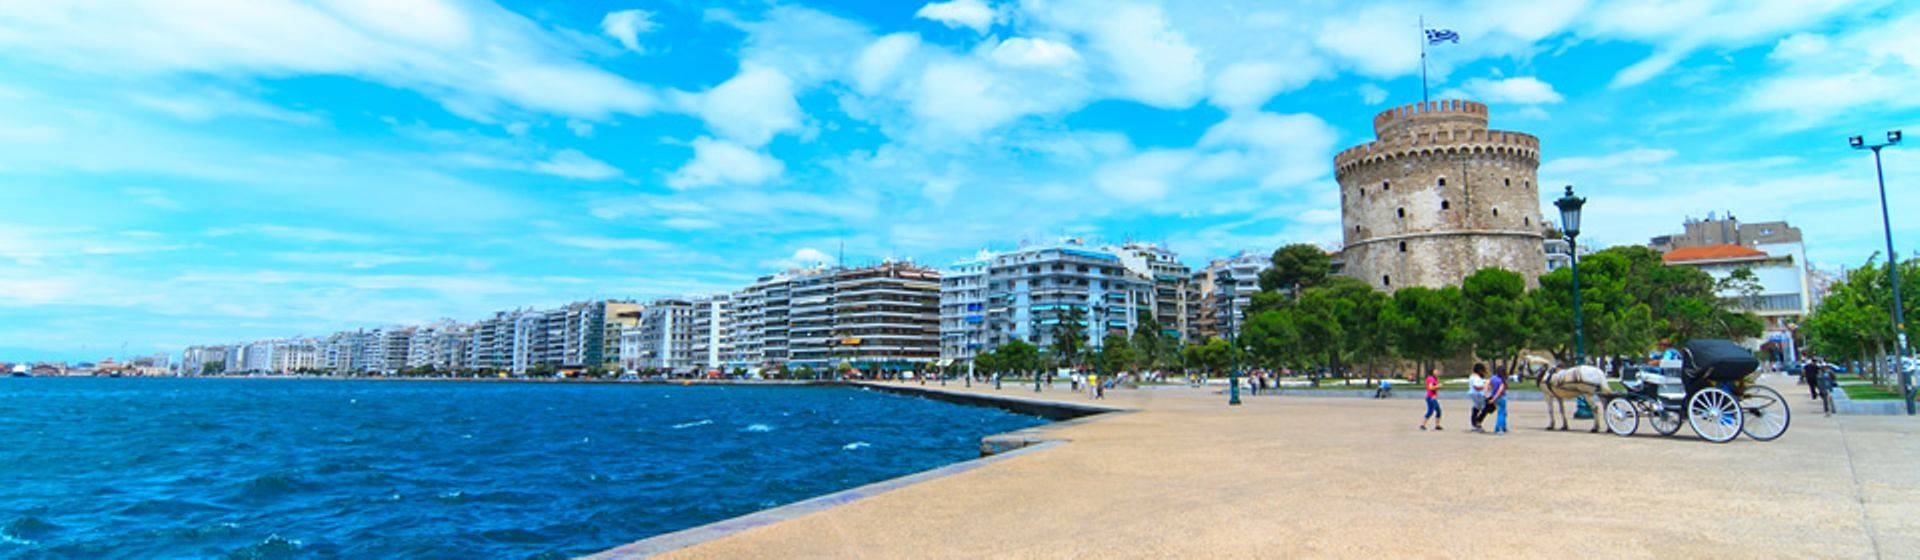 Holidays to Thessaloniki Image